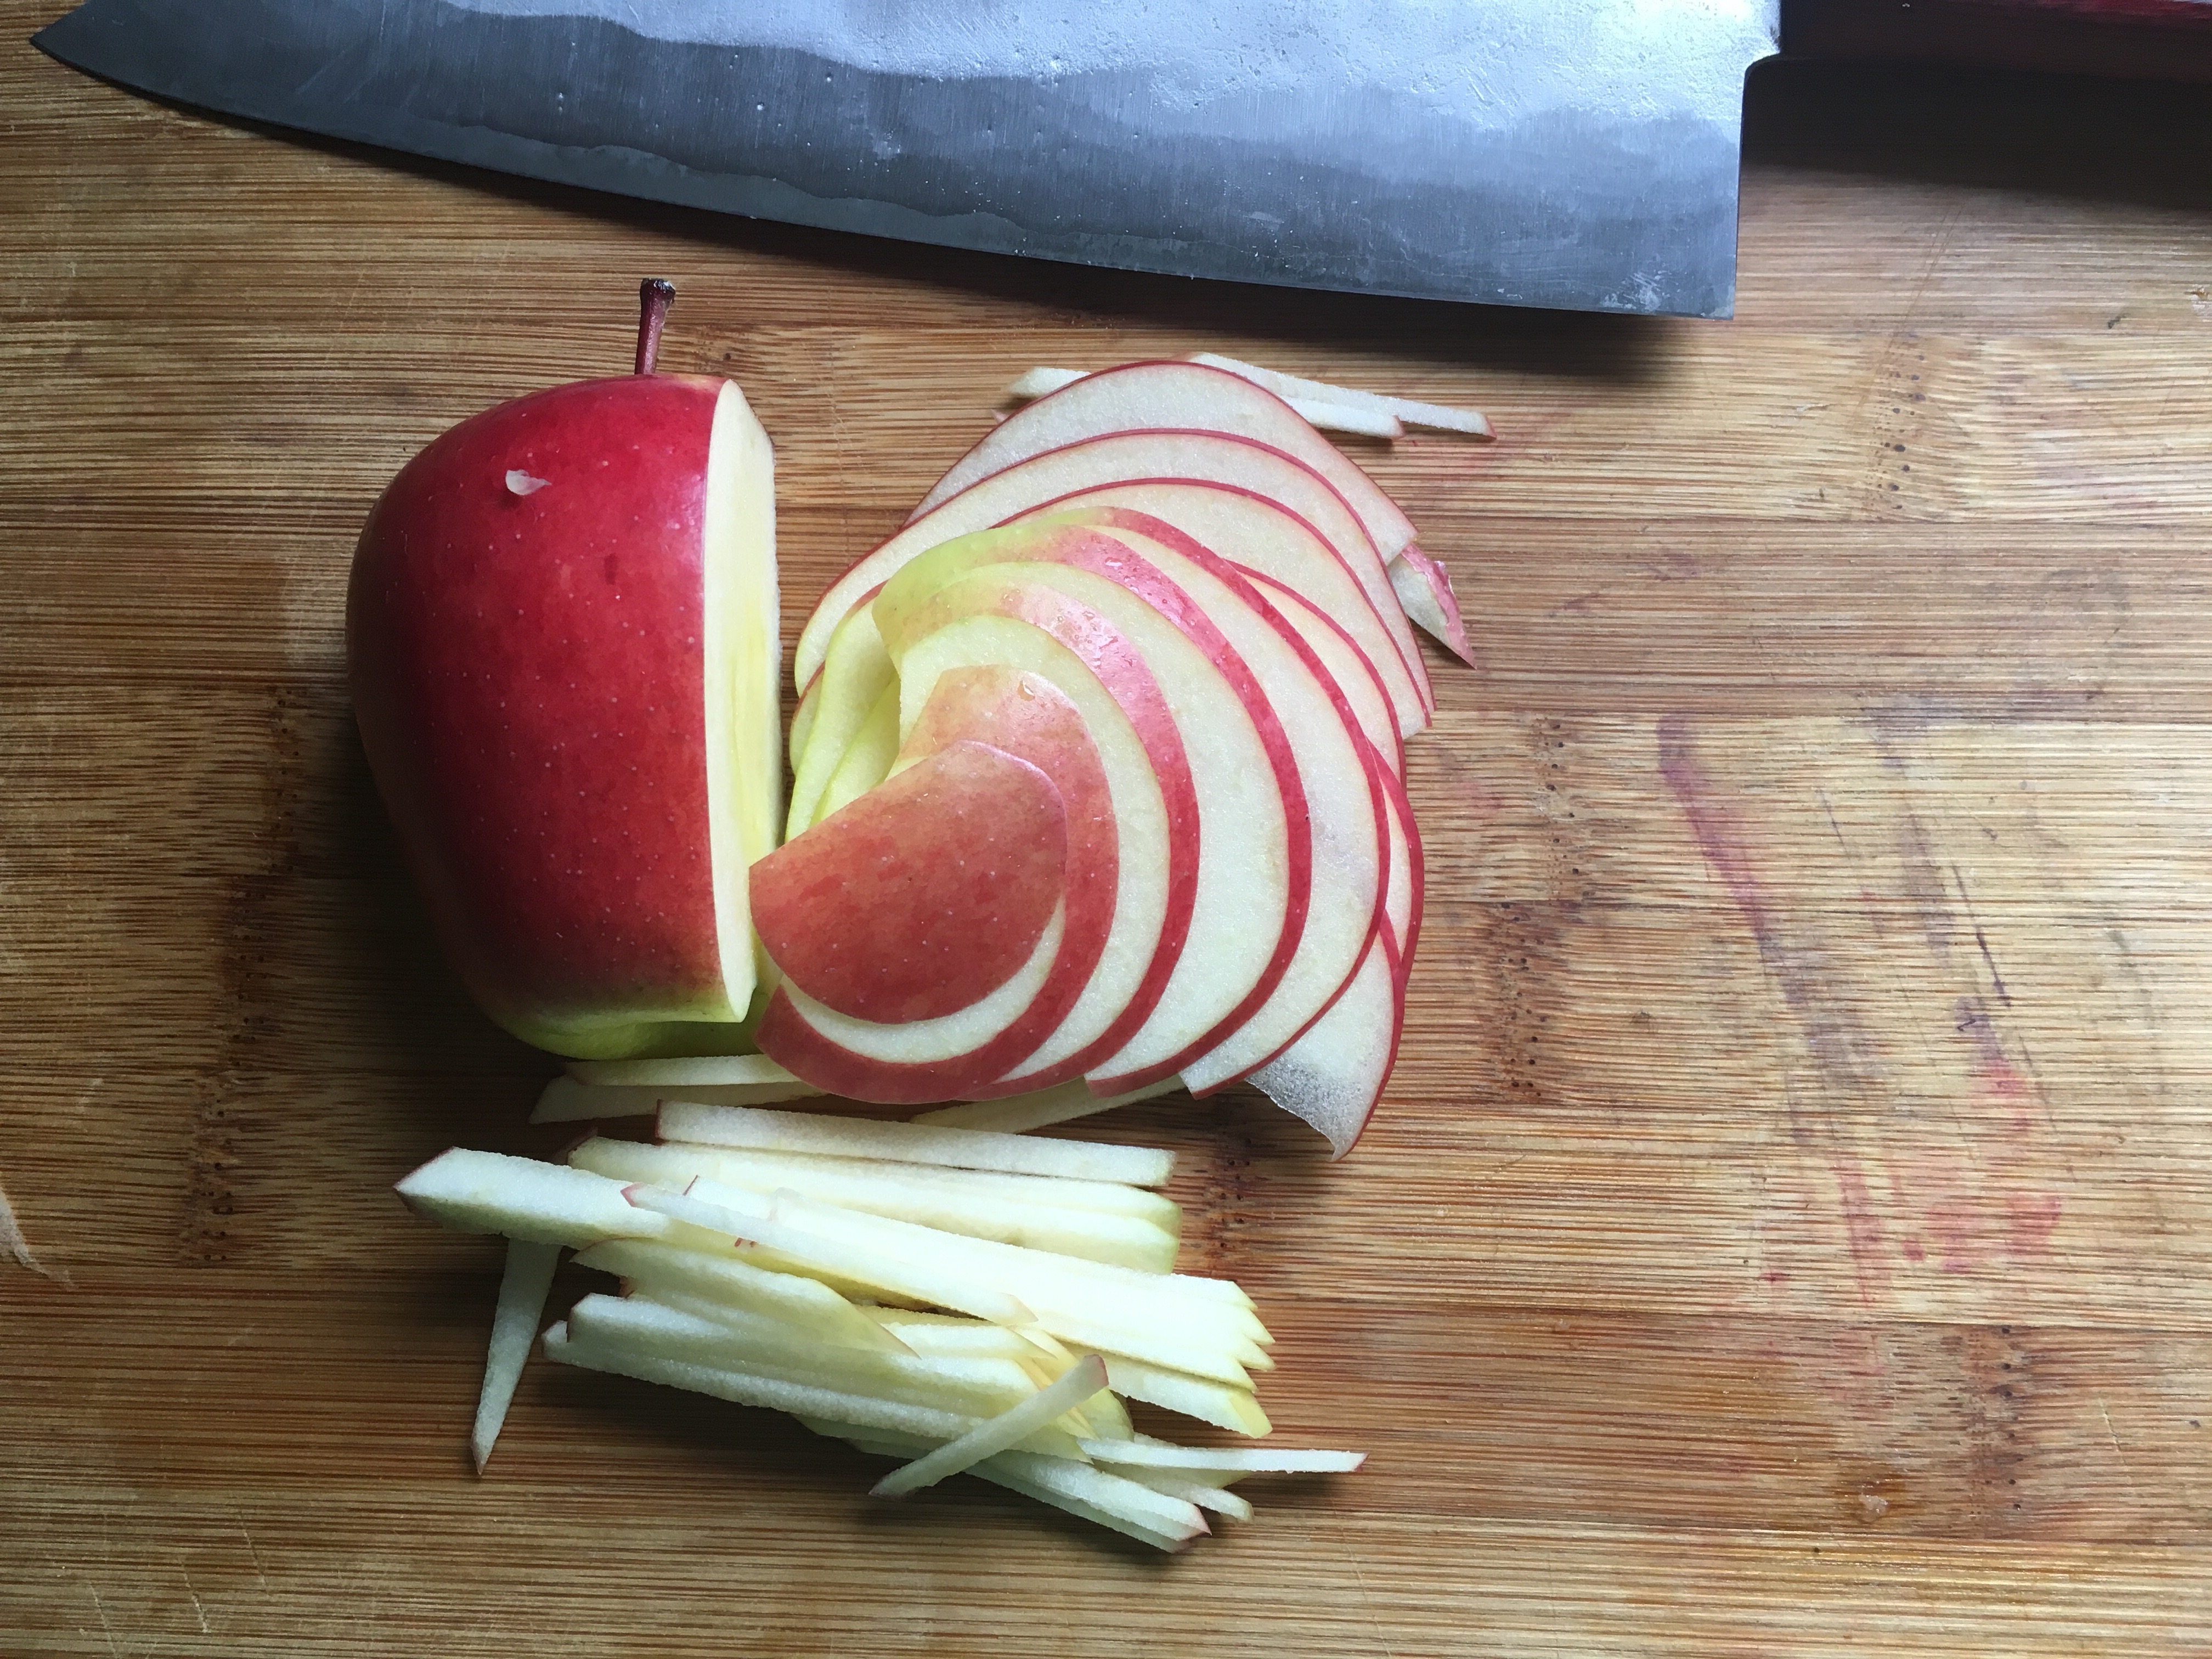 Apple Sliced the same way as the Tomato for the Pico de Gallo